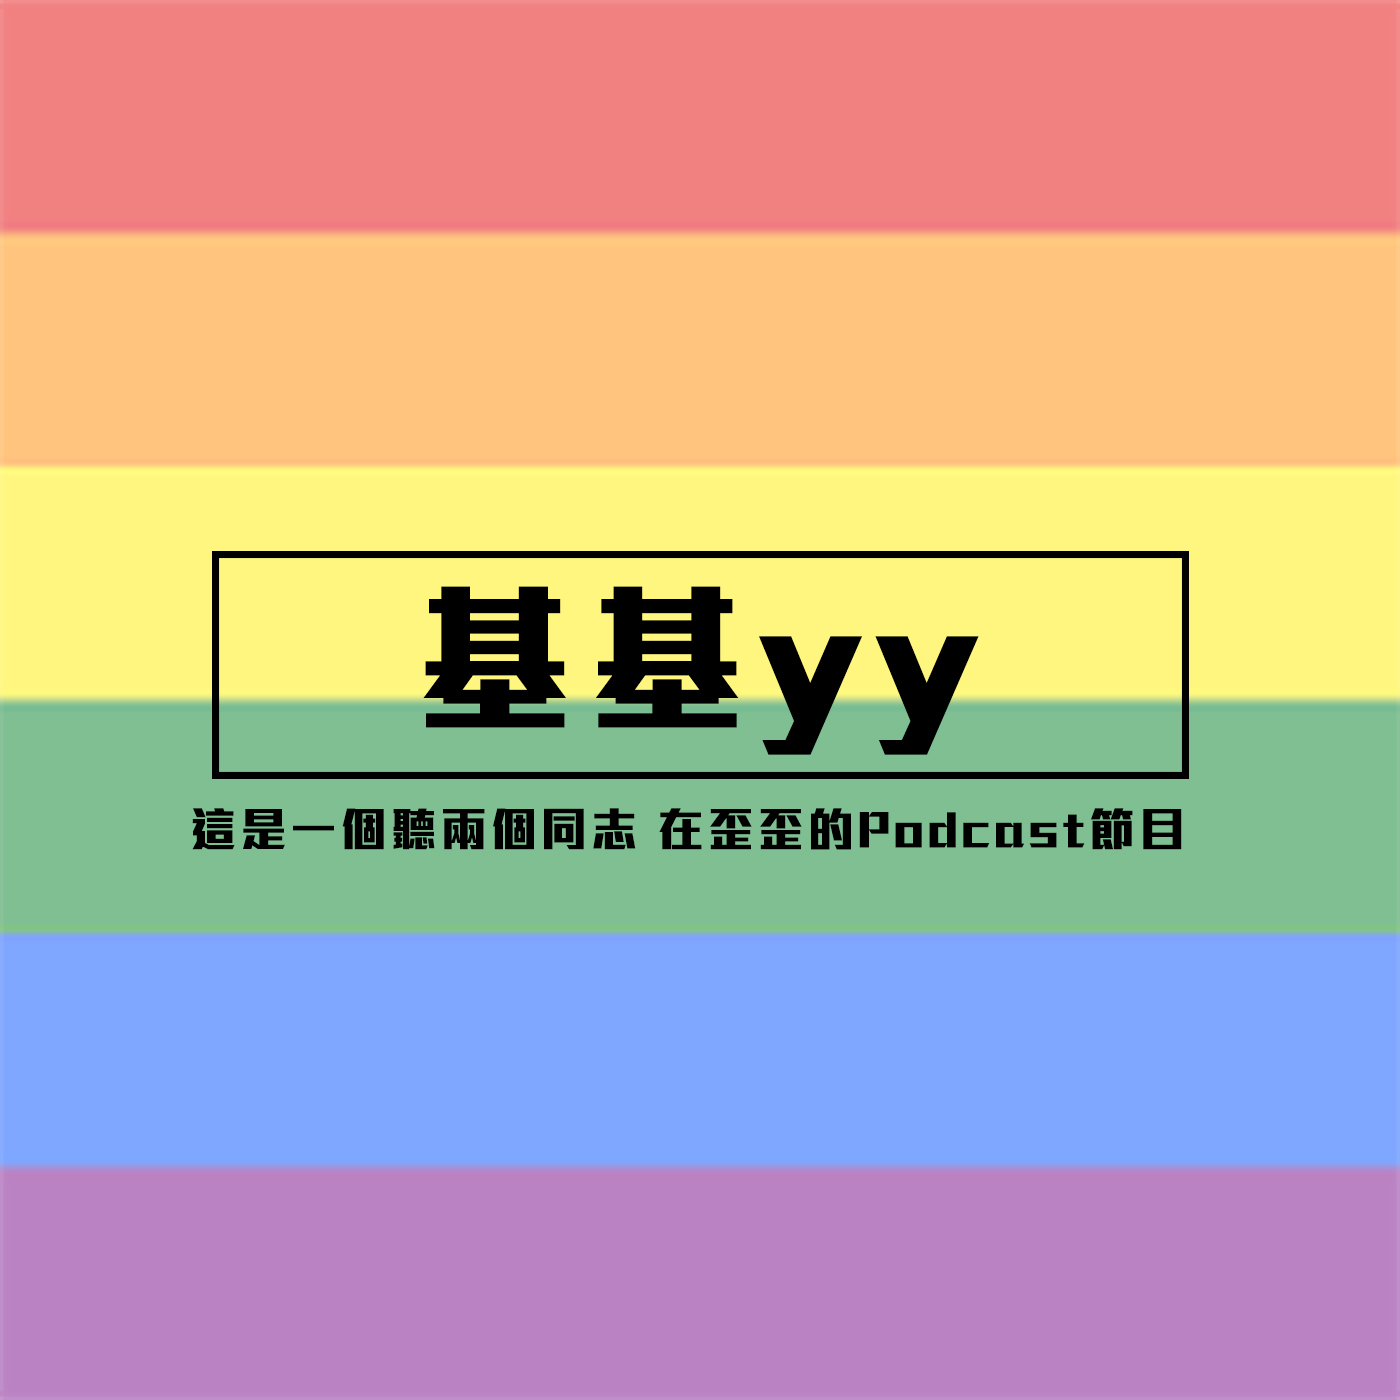 基基yy | EP010 機智的老gay生活 ft.機智老人james